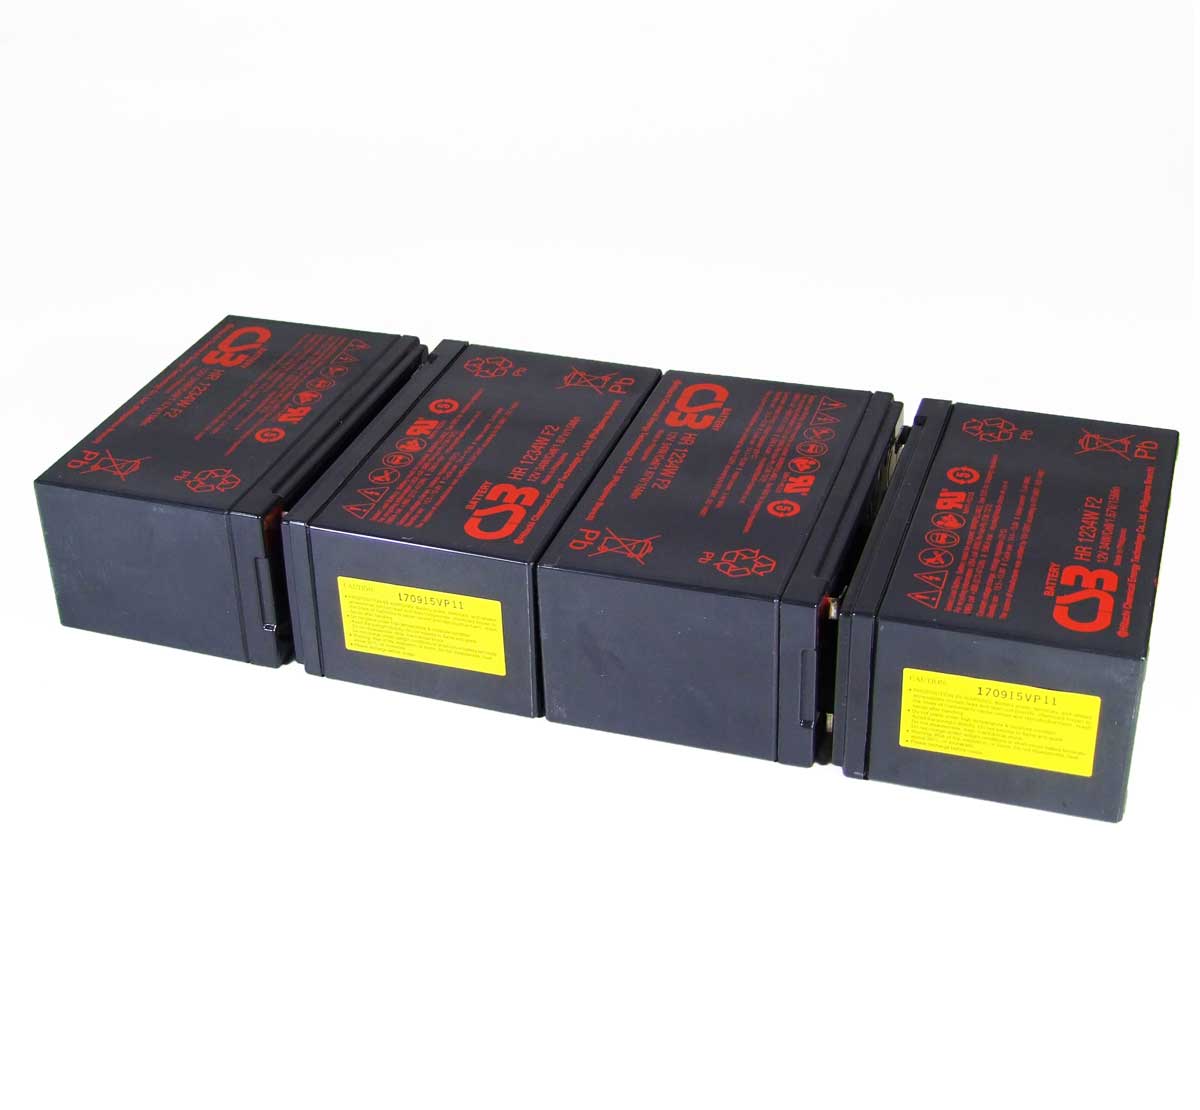 MDS31 UPS Battery Kit - Replaces APC RBC31